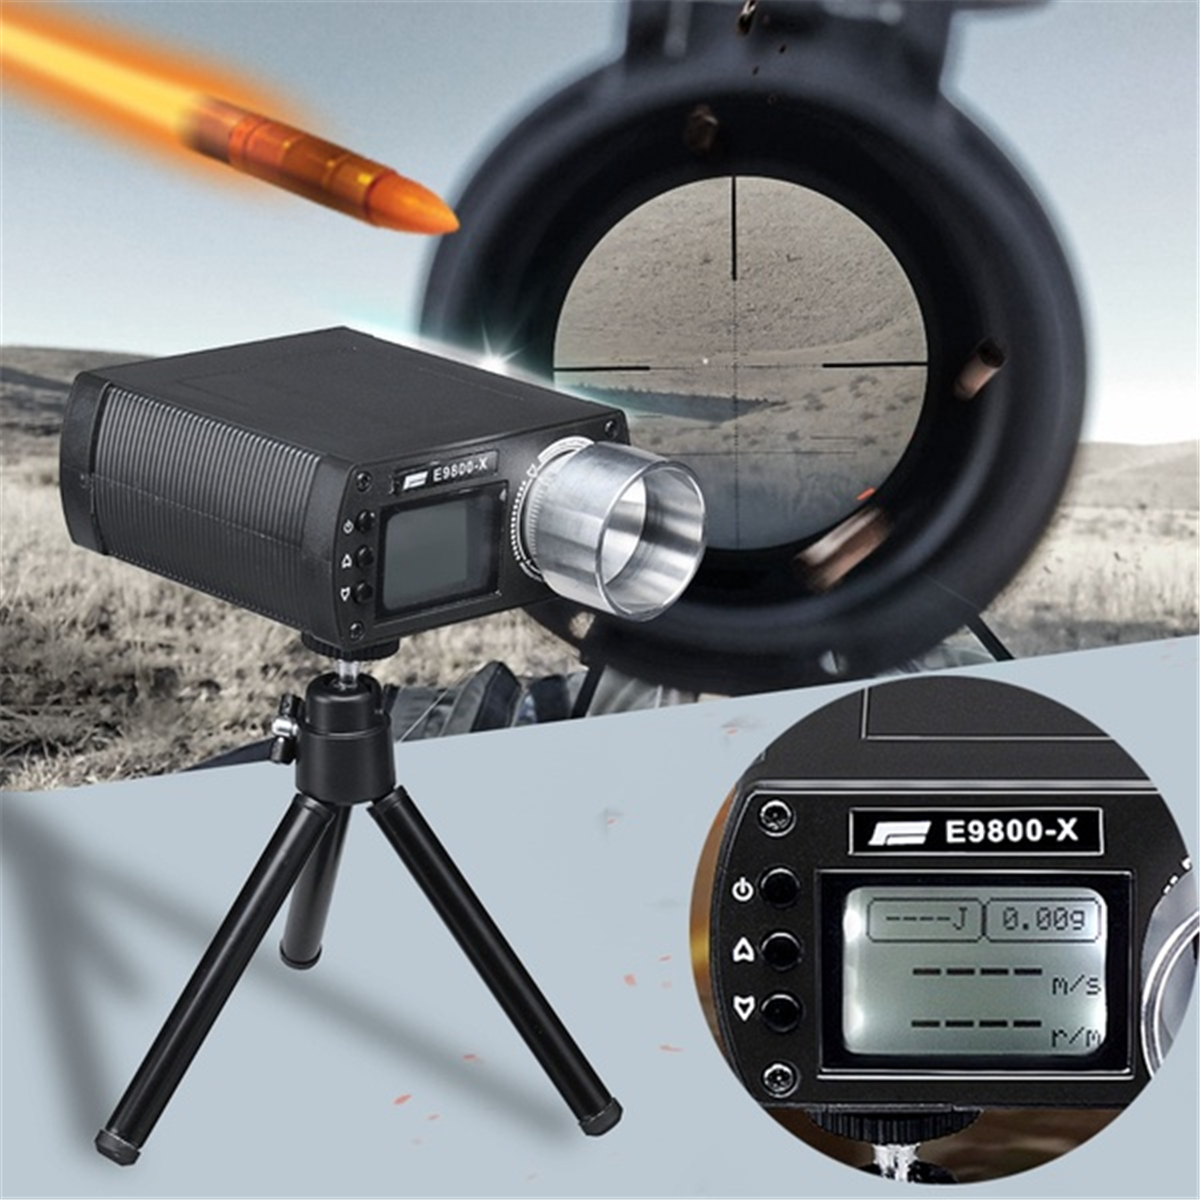 E9800-X Shooting Speed Tester High-Precision Shooting Chronograph LCD Screen 14